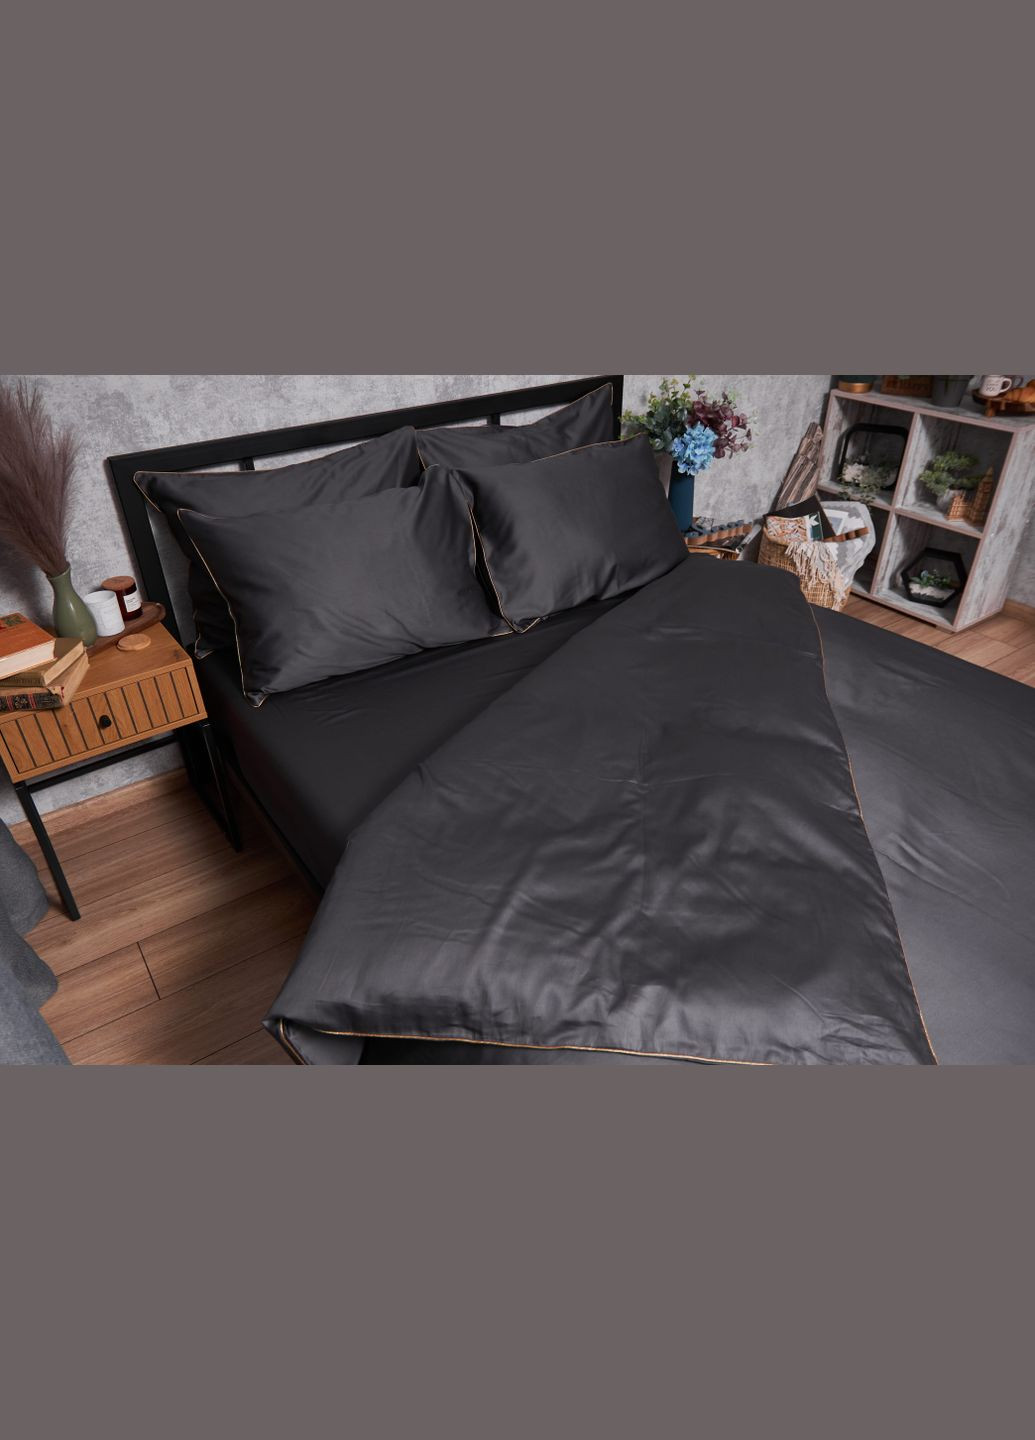 Комплект постельного белья Satin Premium полуторный евро 160х220 наволочки 2х40х60 (MS-820003905) Moon&Star gold corner (288043700)